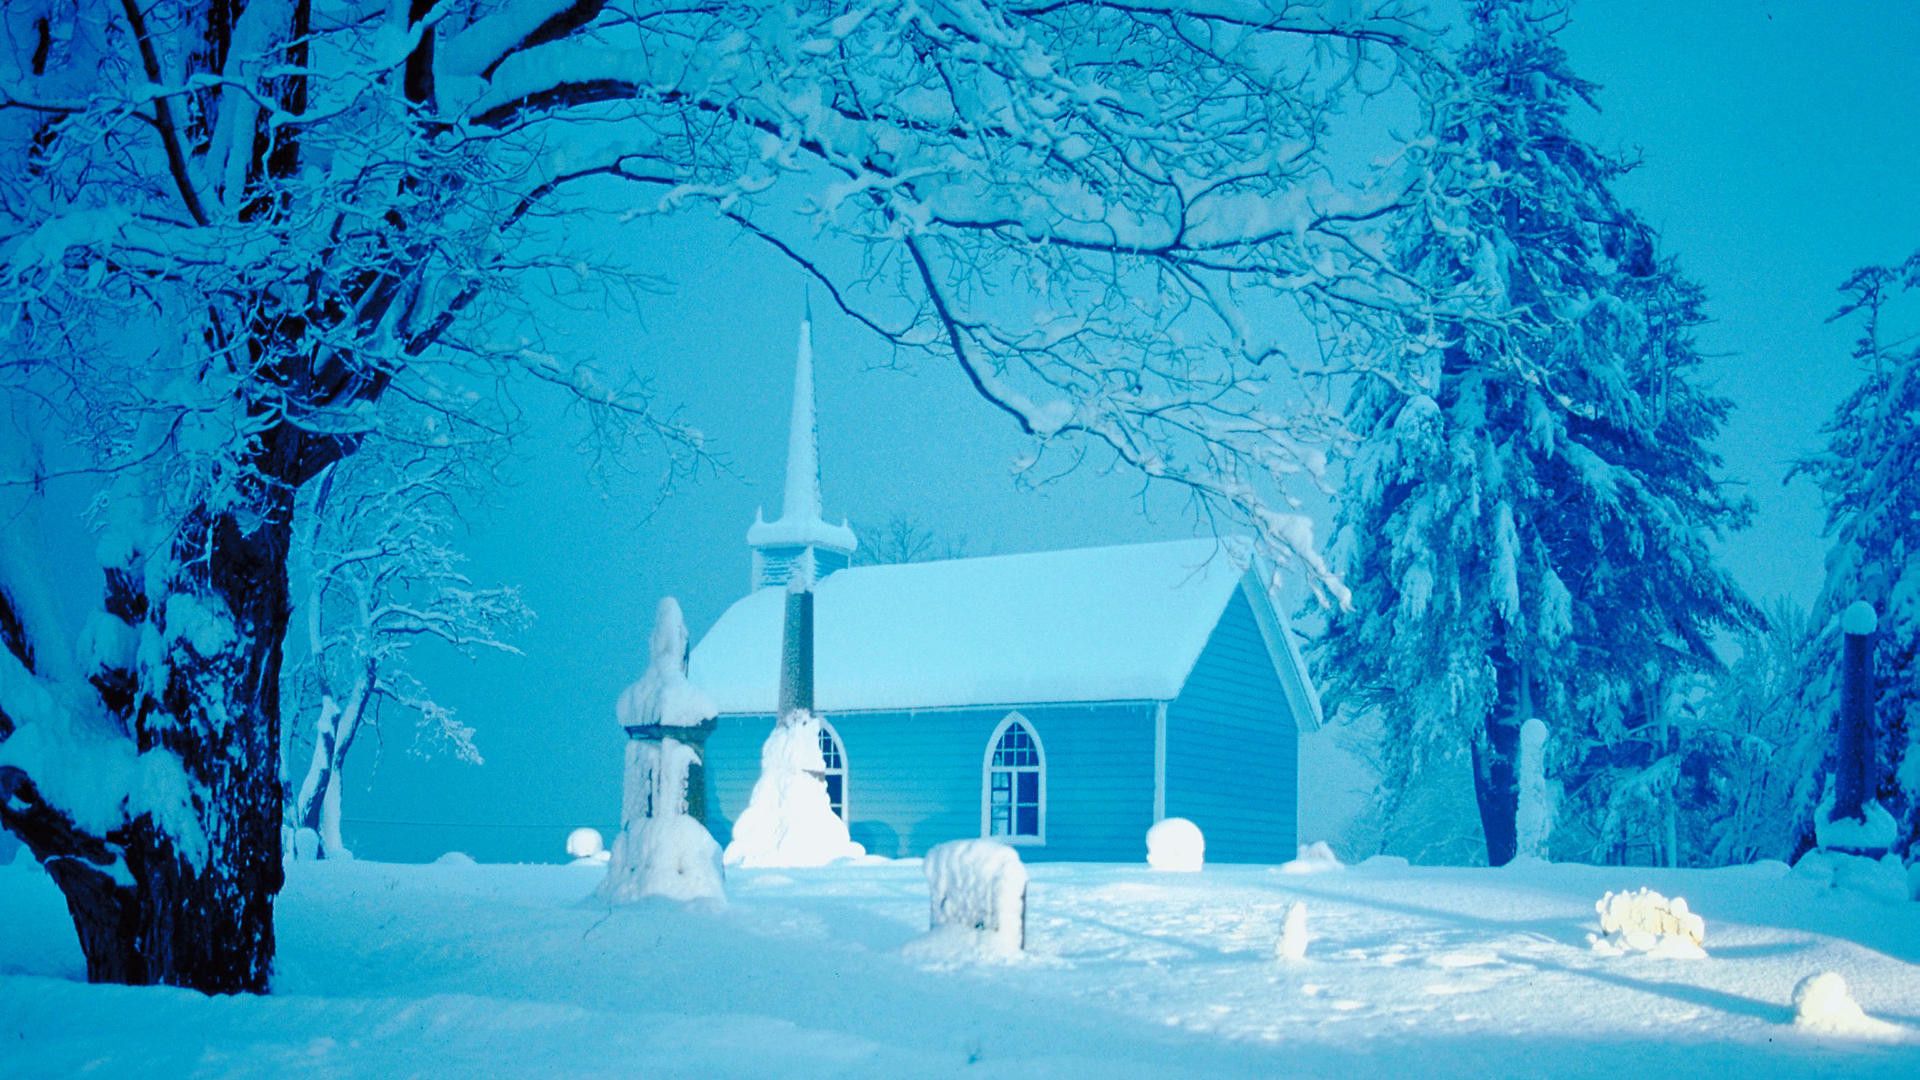 Beautiful Winter Landscapes Amazing Scenery Pinterest | HD Wallpapers |  Pinterest | Snow scenes, Wallpaper and Winter landscape